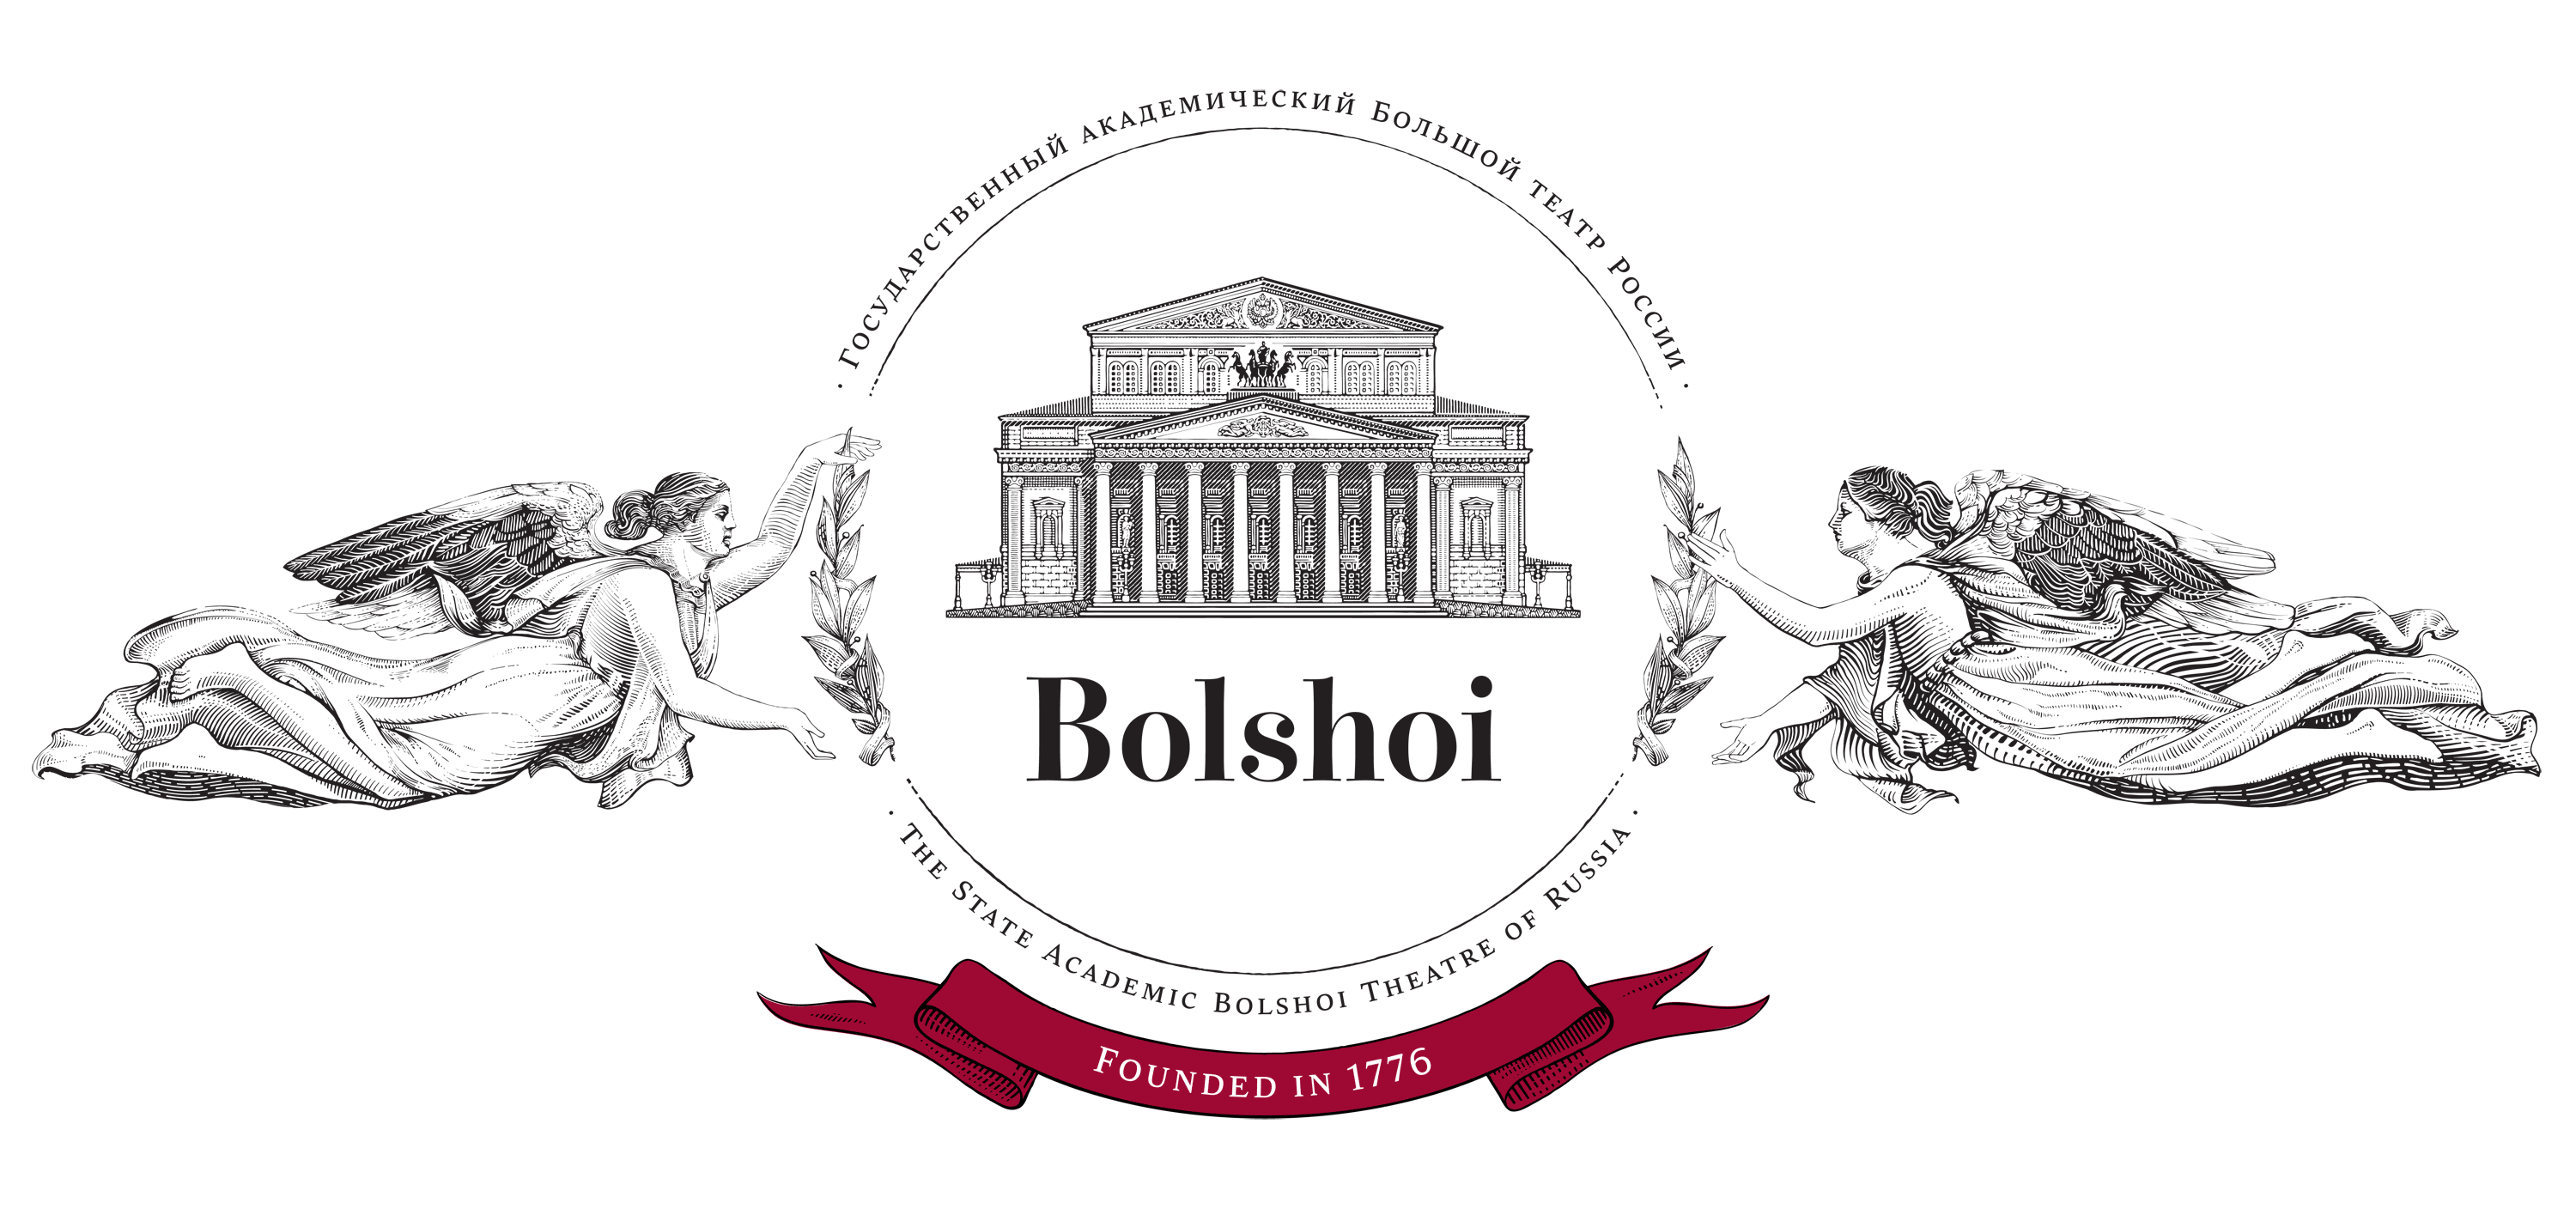 The Bolshoi Theater